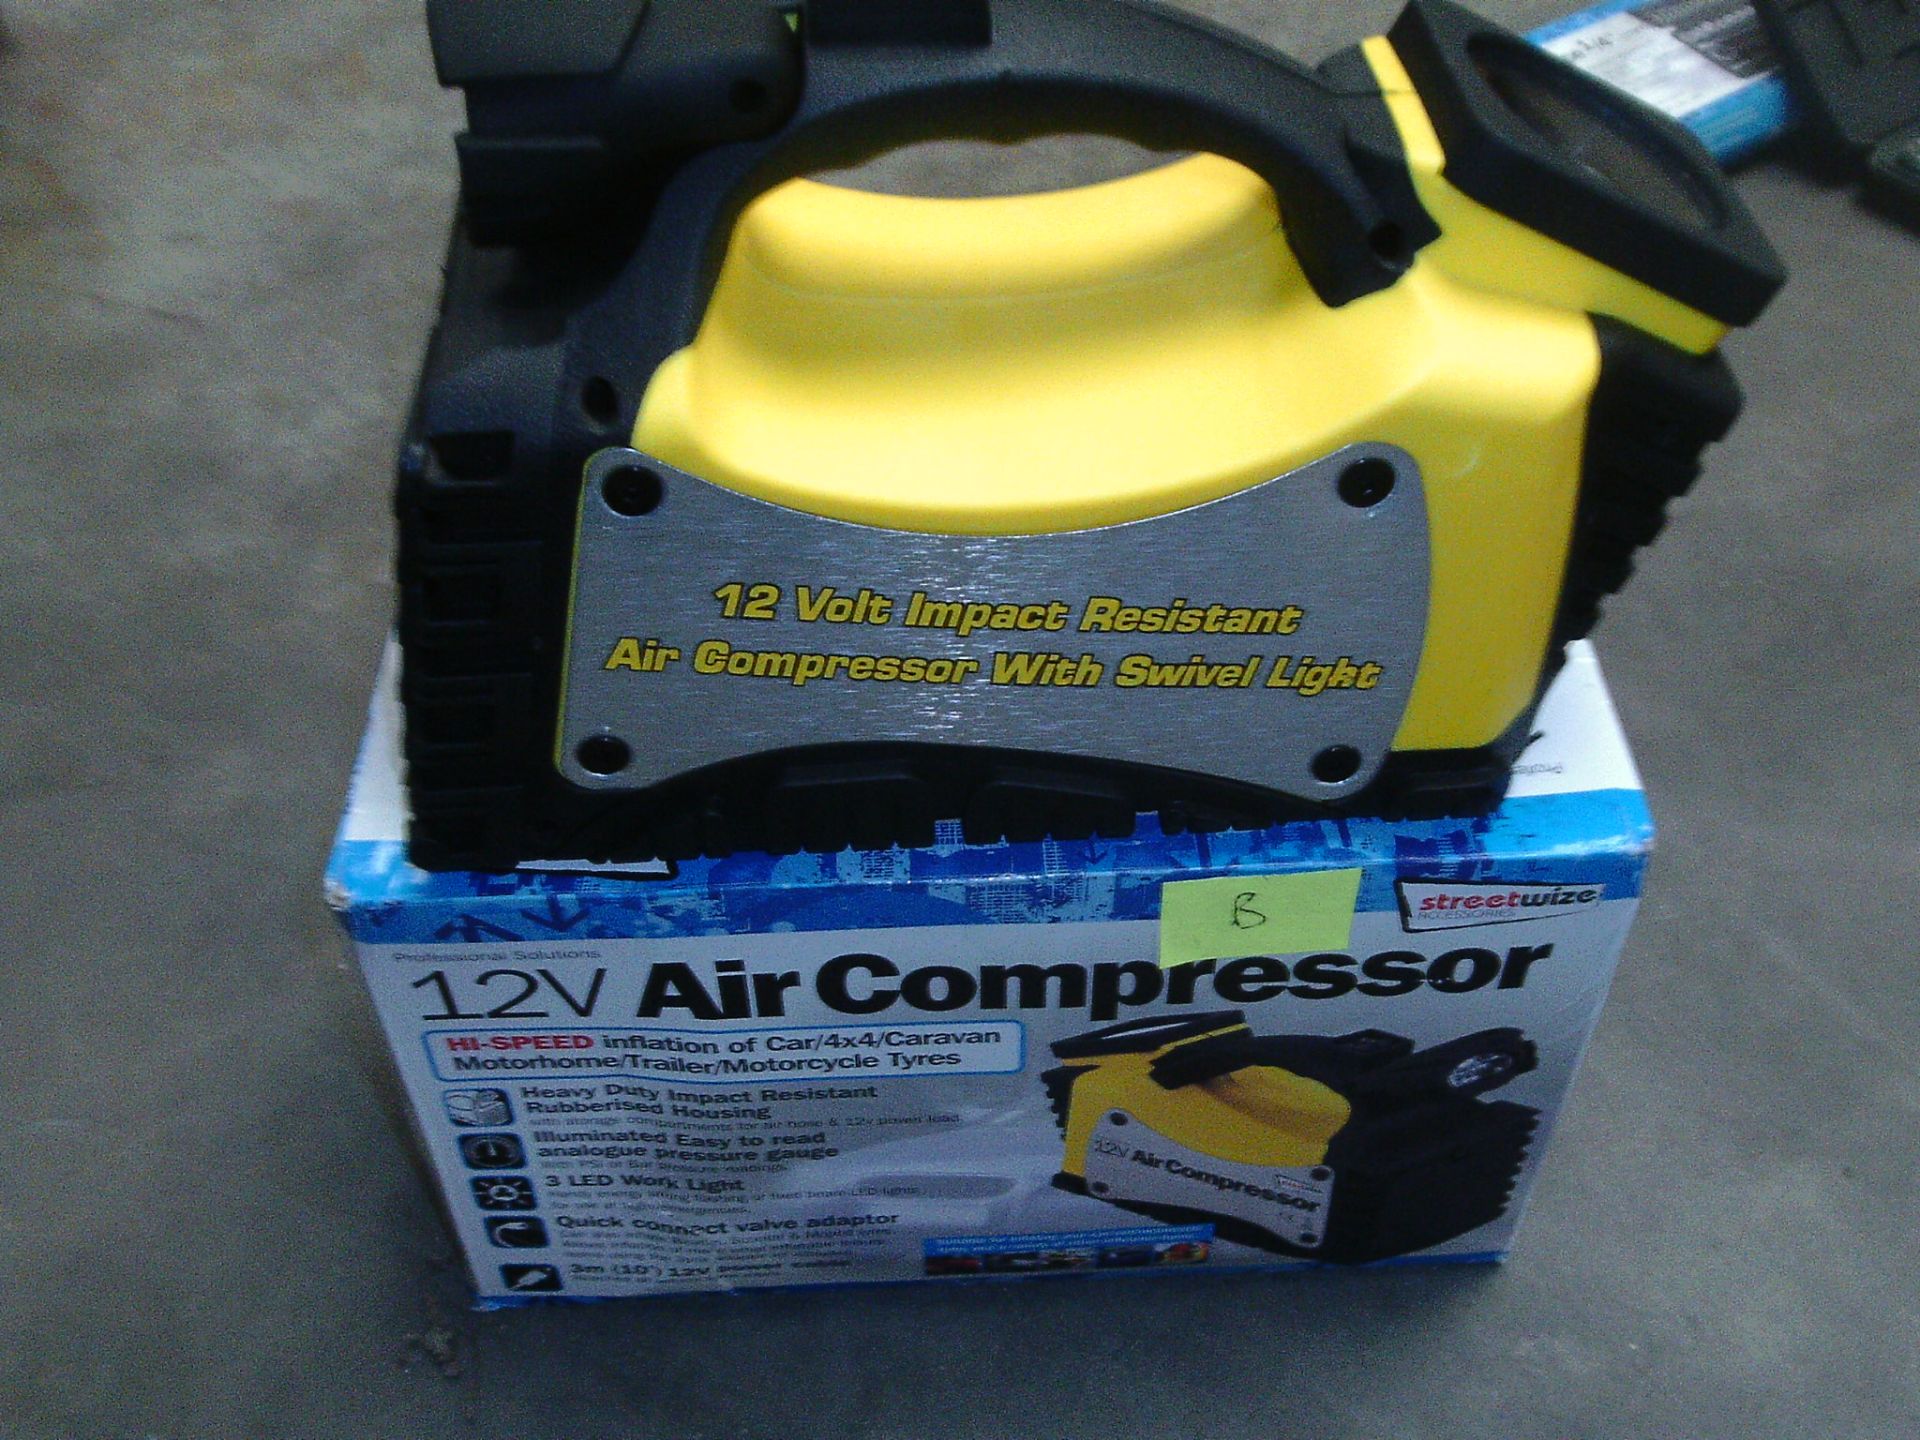 Boxed 12 V Air compressor - Impact resistant